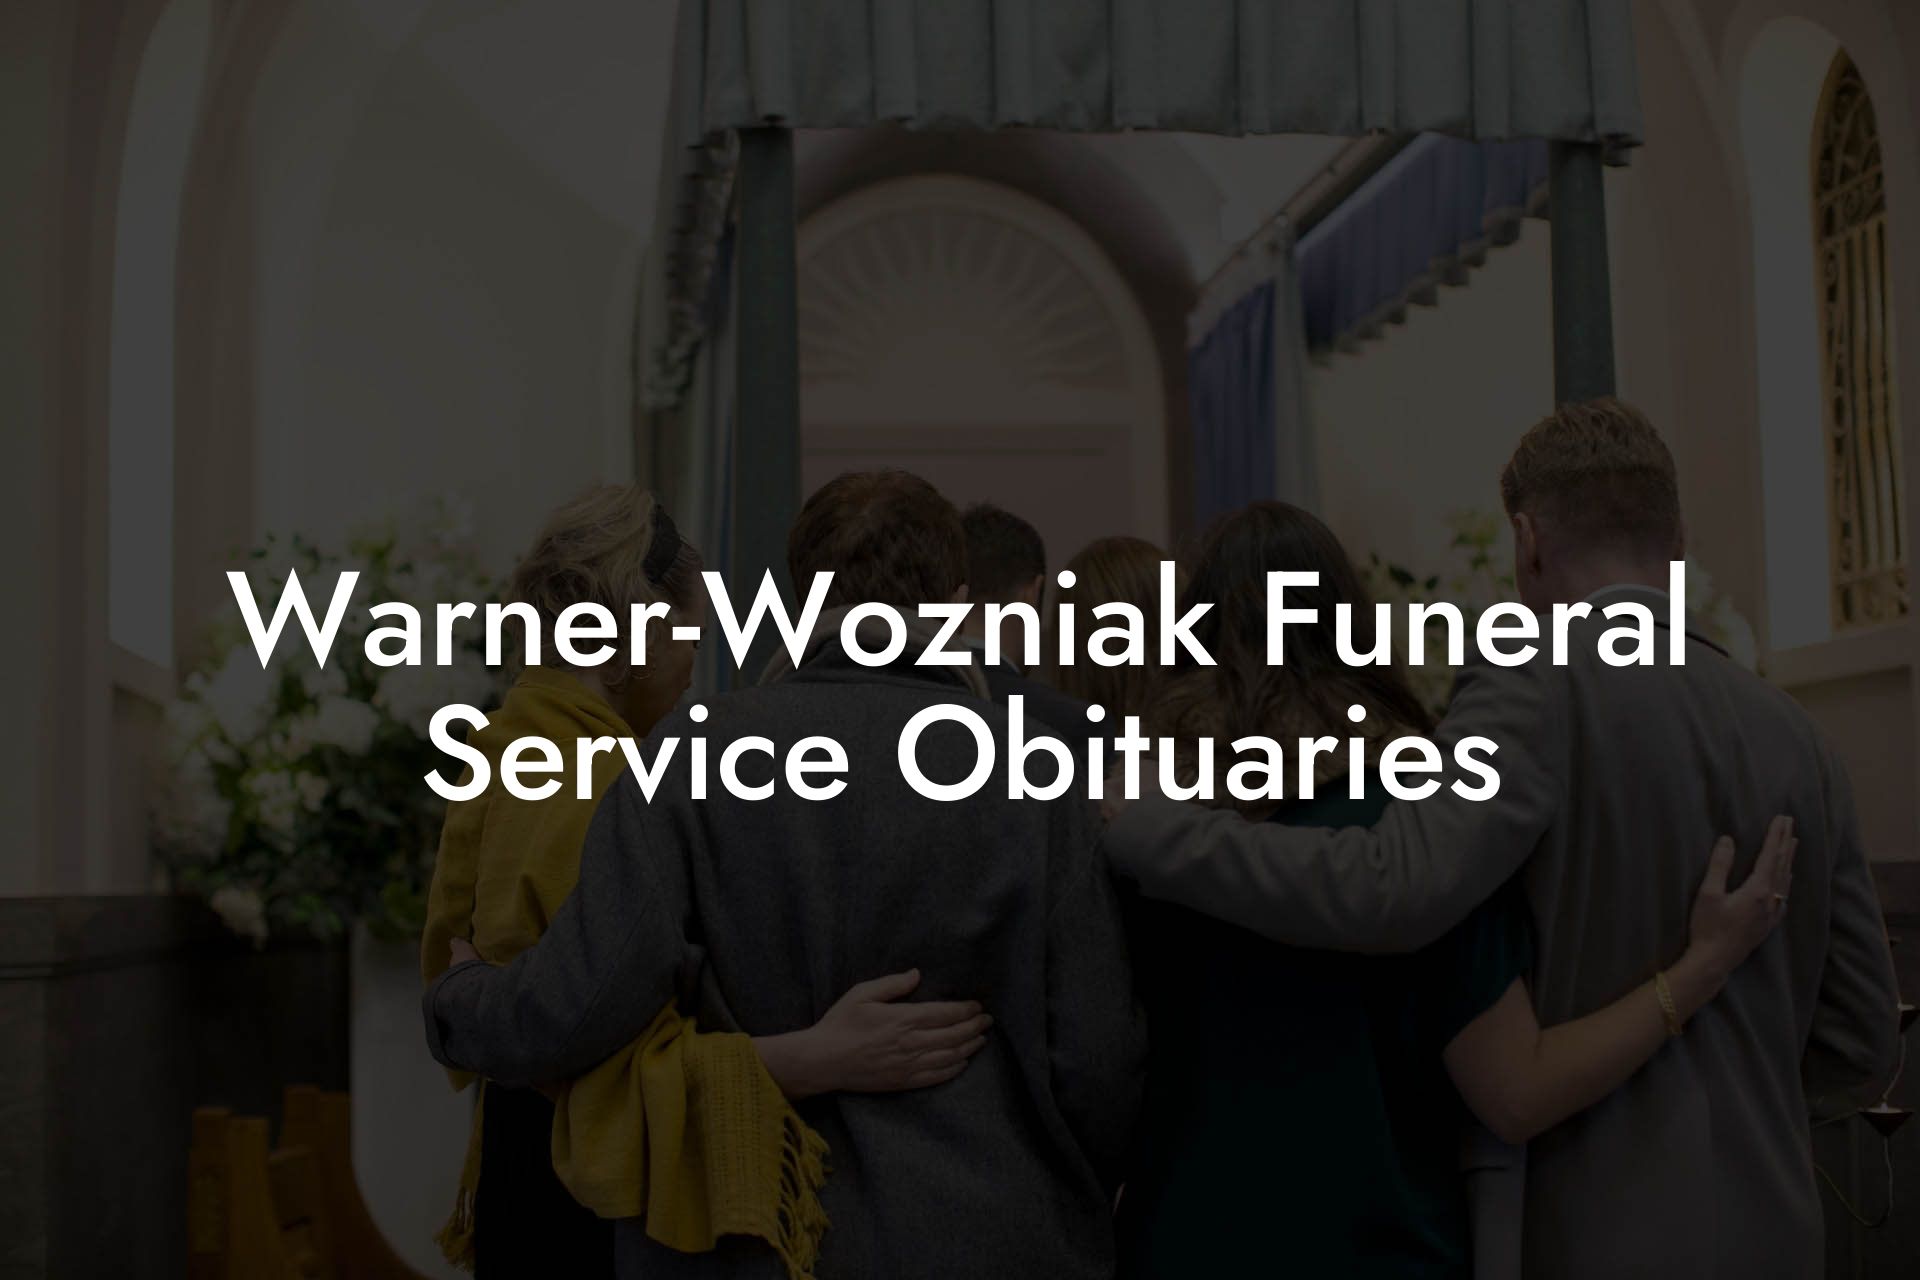 Warner-Wozniak Funeral Service Obituaries